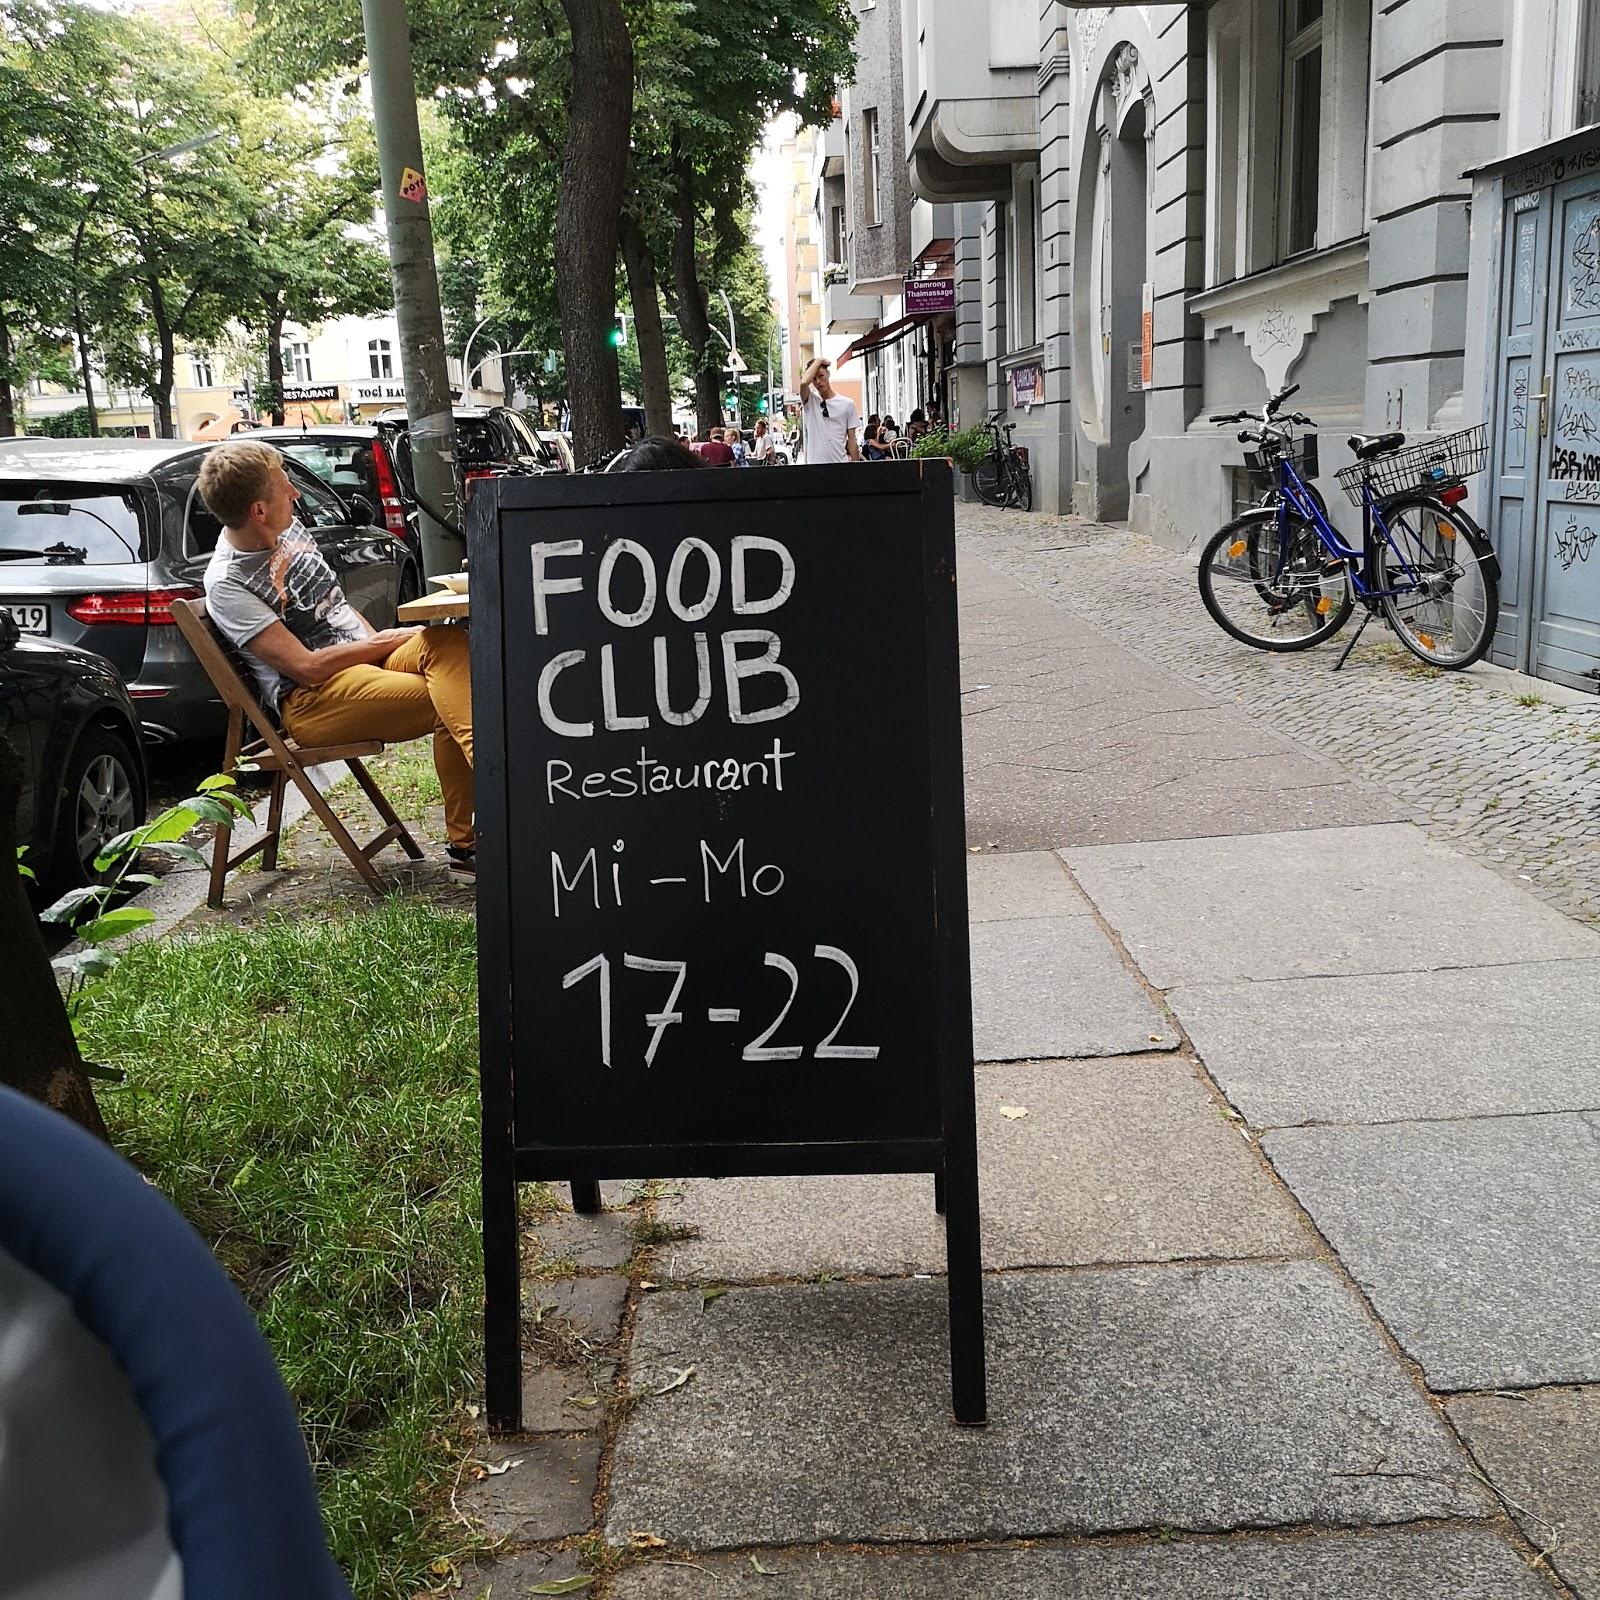 Restaurant "Foodclub Restaurant" in Berlin